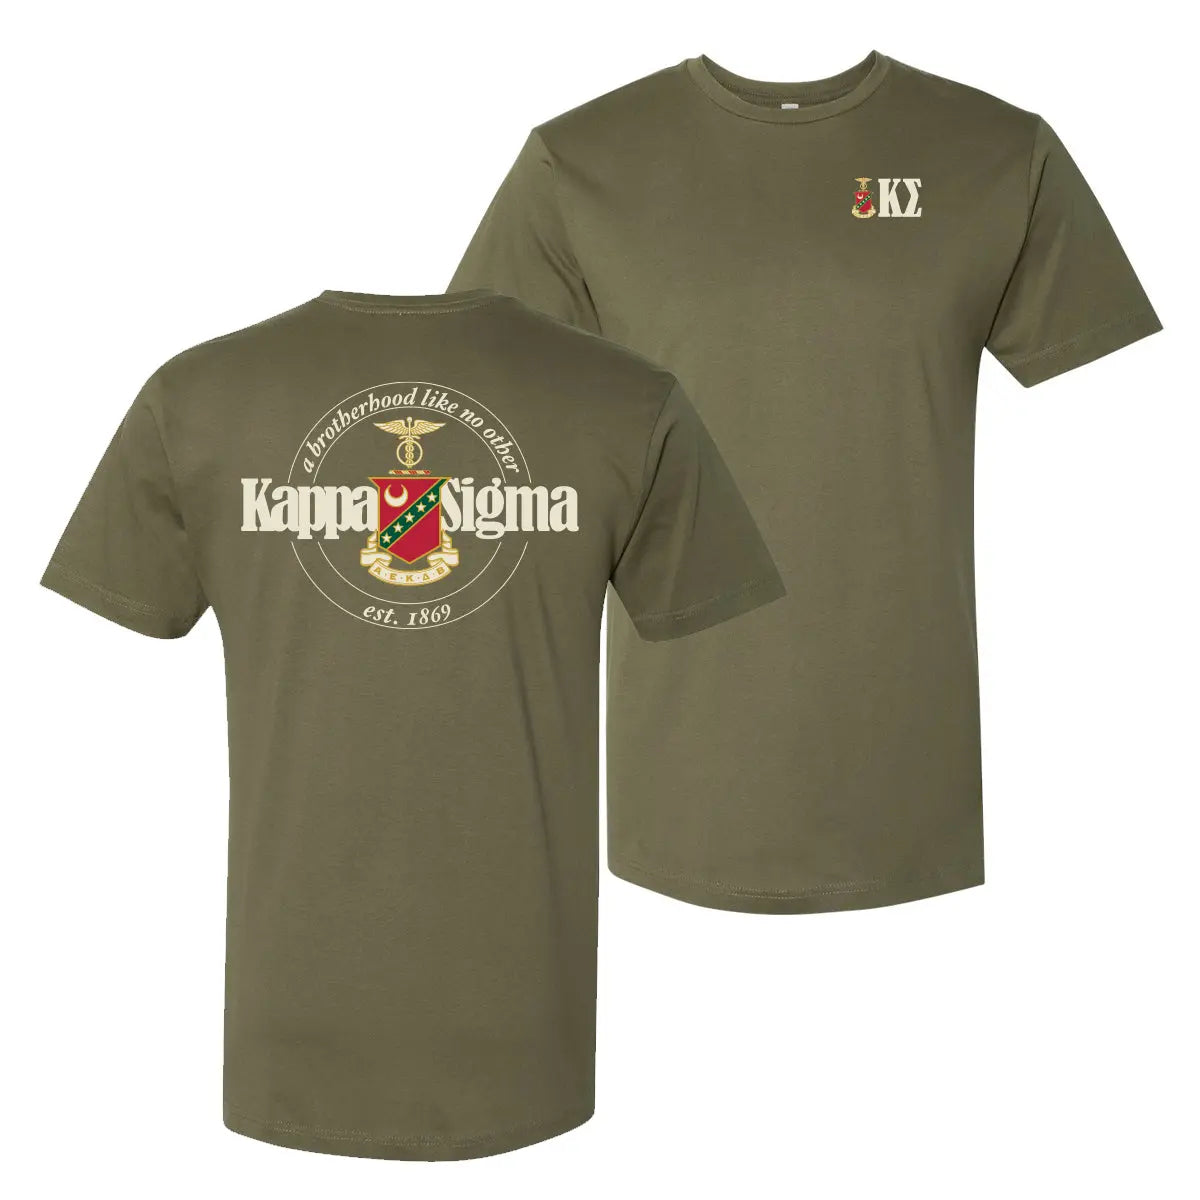 Kappa Sig Lightweight Brotherhood Short Sleeve Tee - Kappa Sigma Official Store